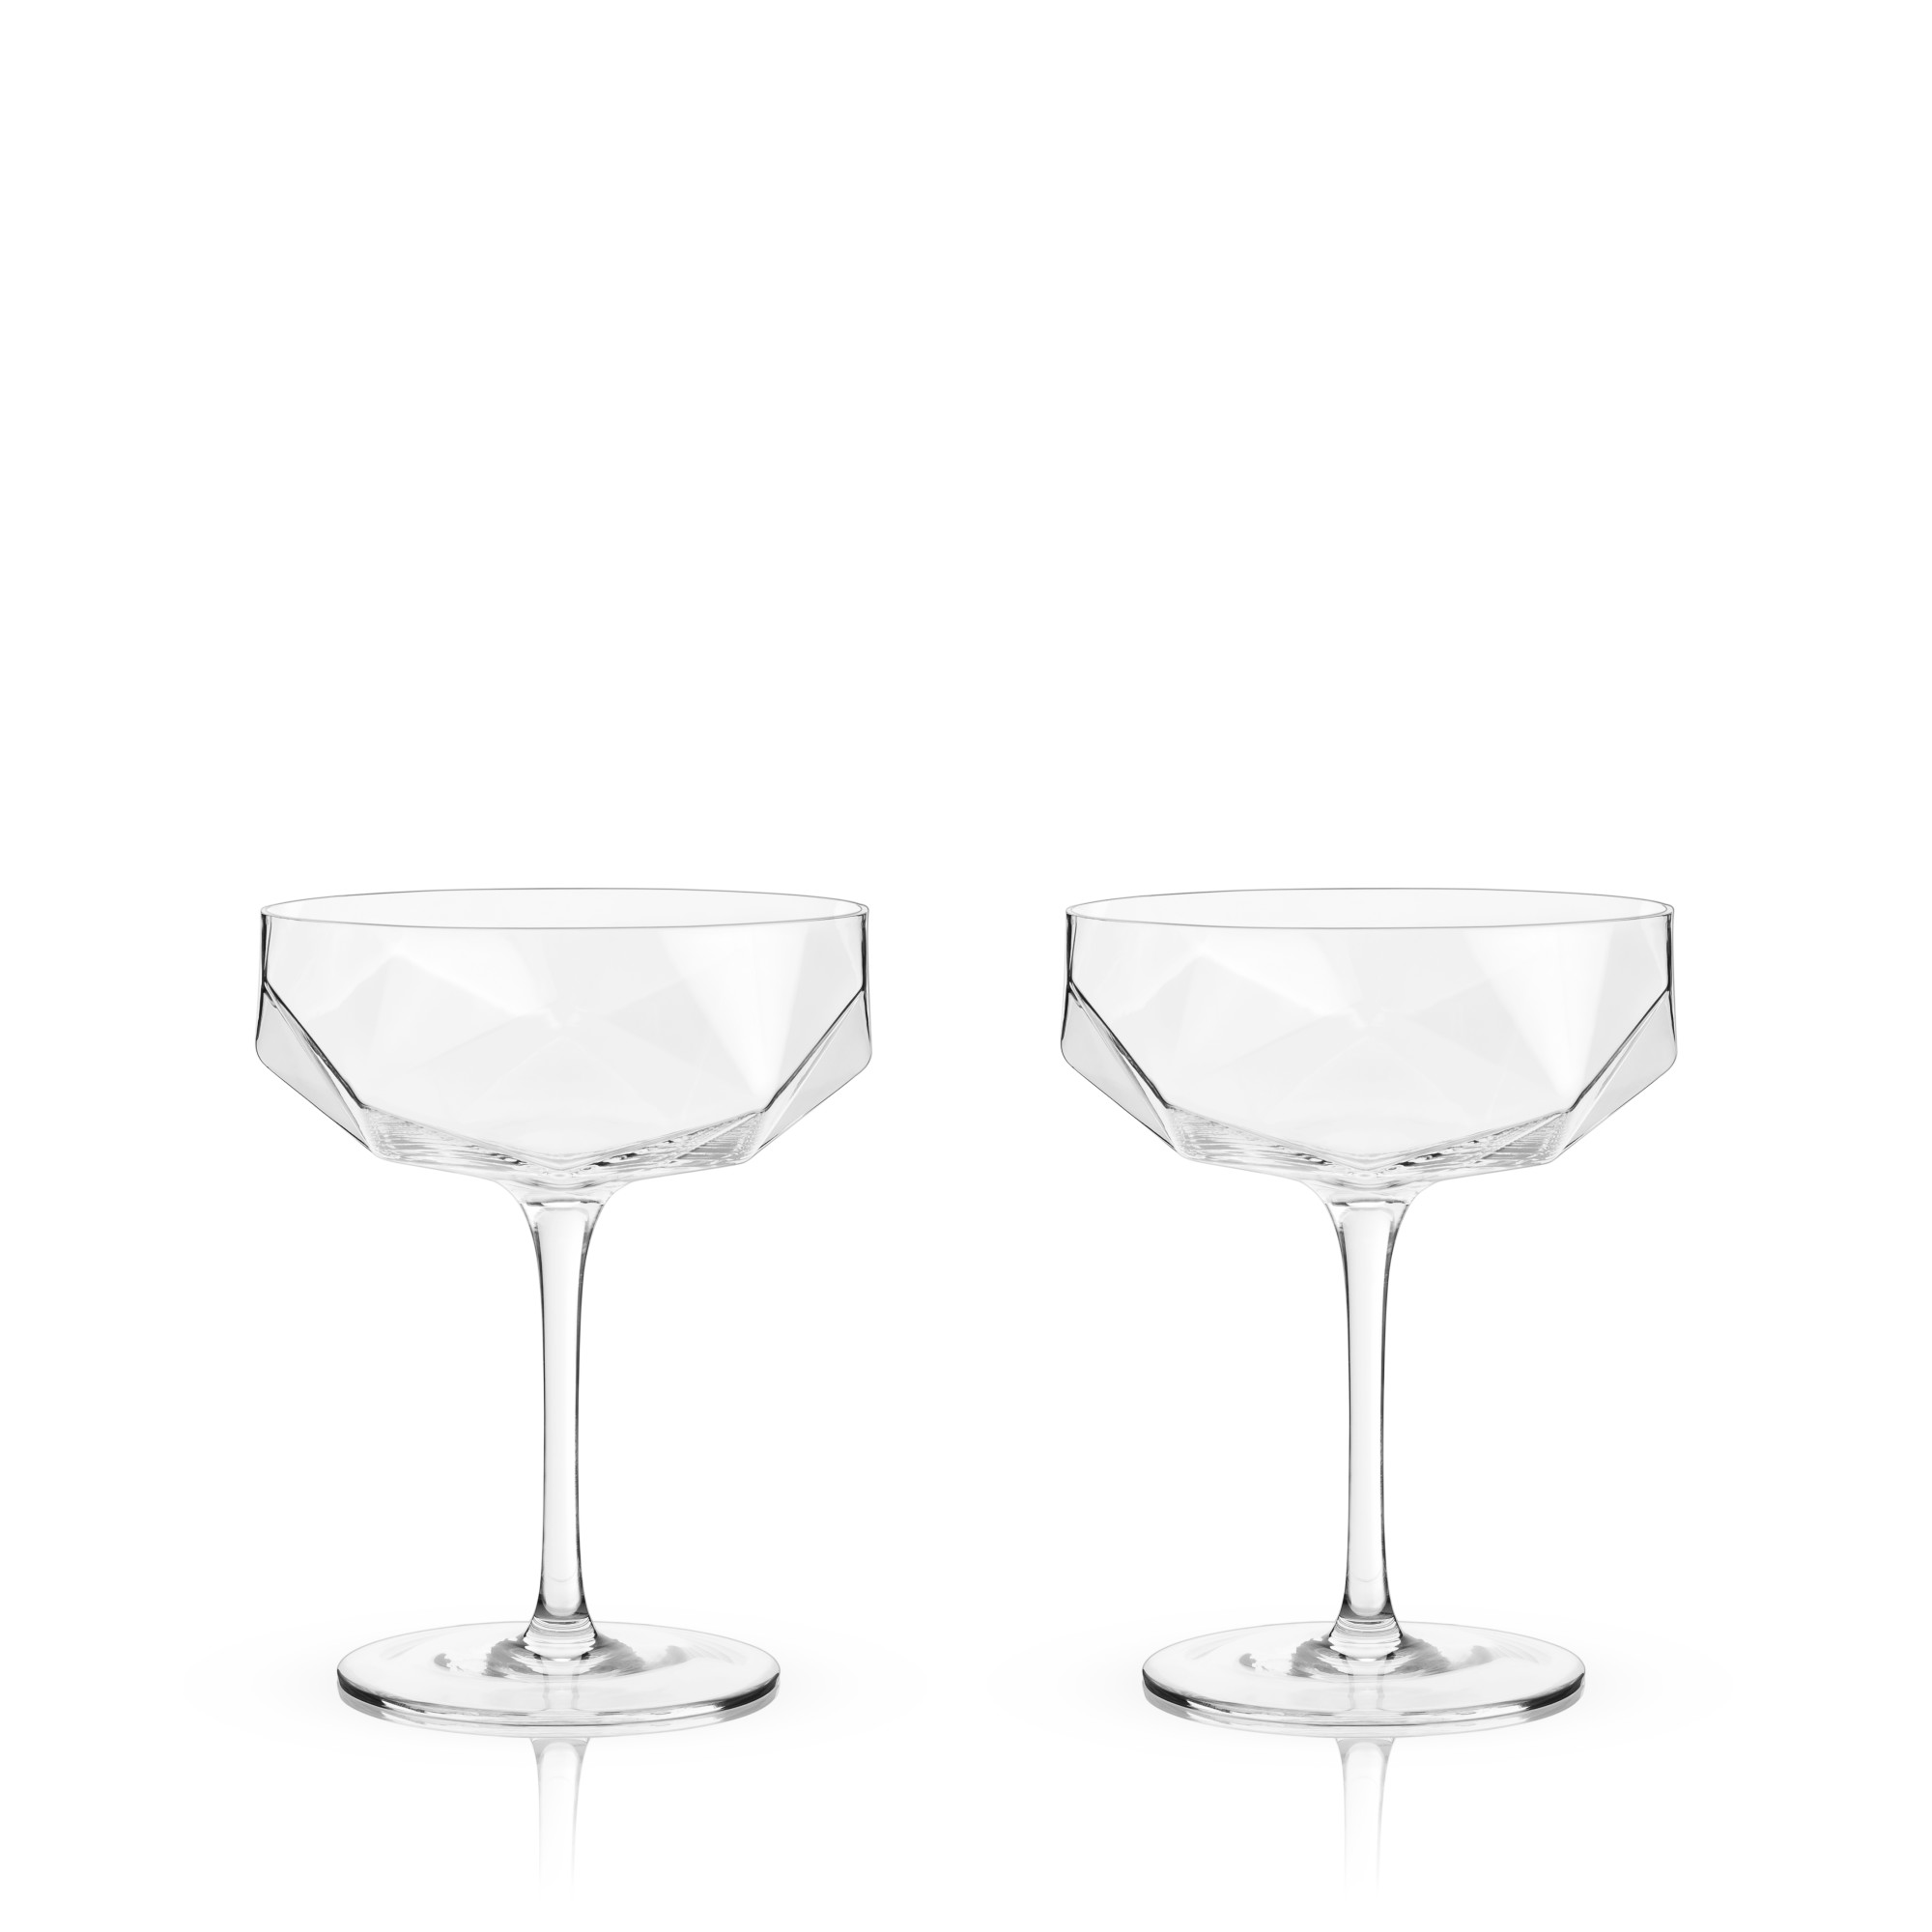 Viski Faceted Coupes - Modern Stemmed Champagne Coupe Cocktail Glasses, Set of 2 - image 3 of 10